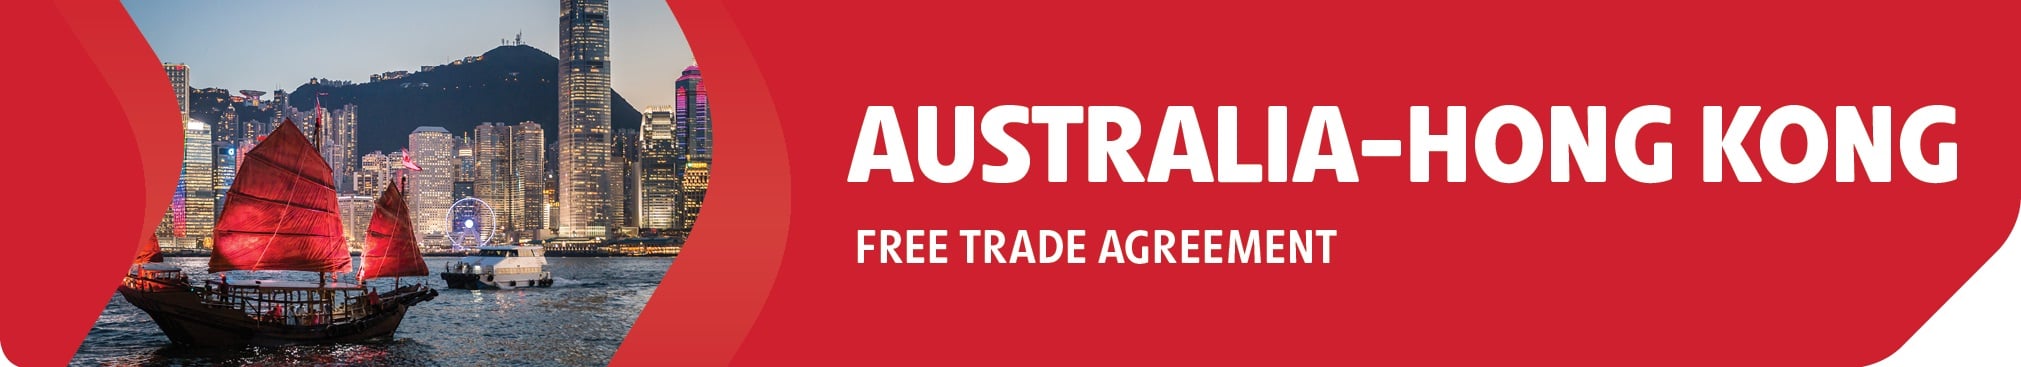 Australia-Hong Kong Free Trade Agreement